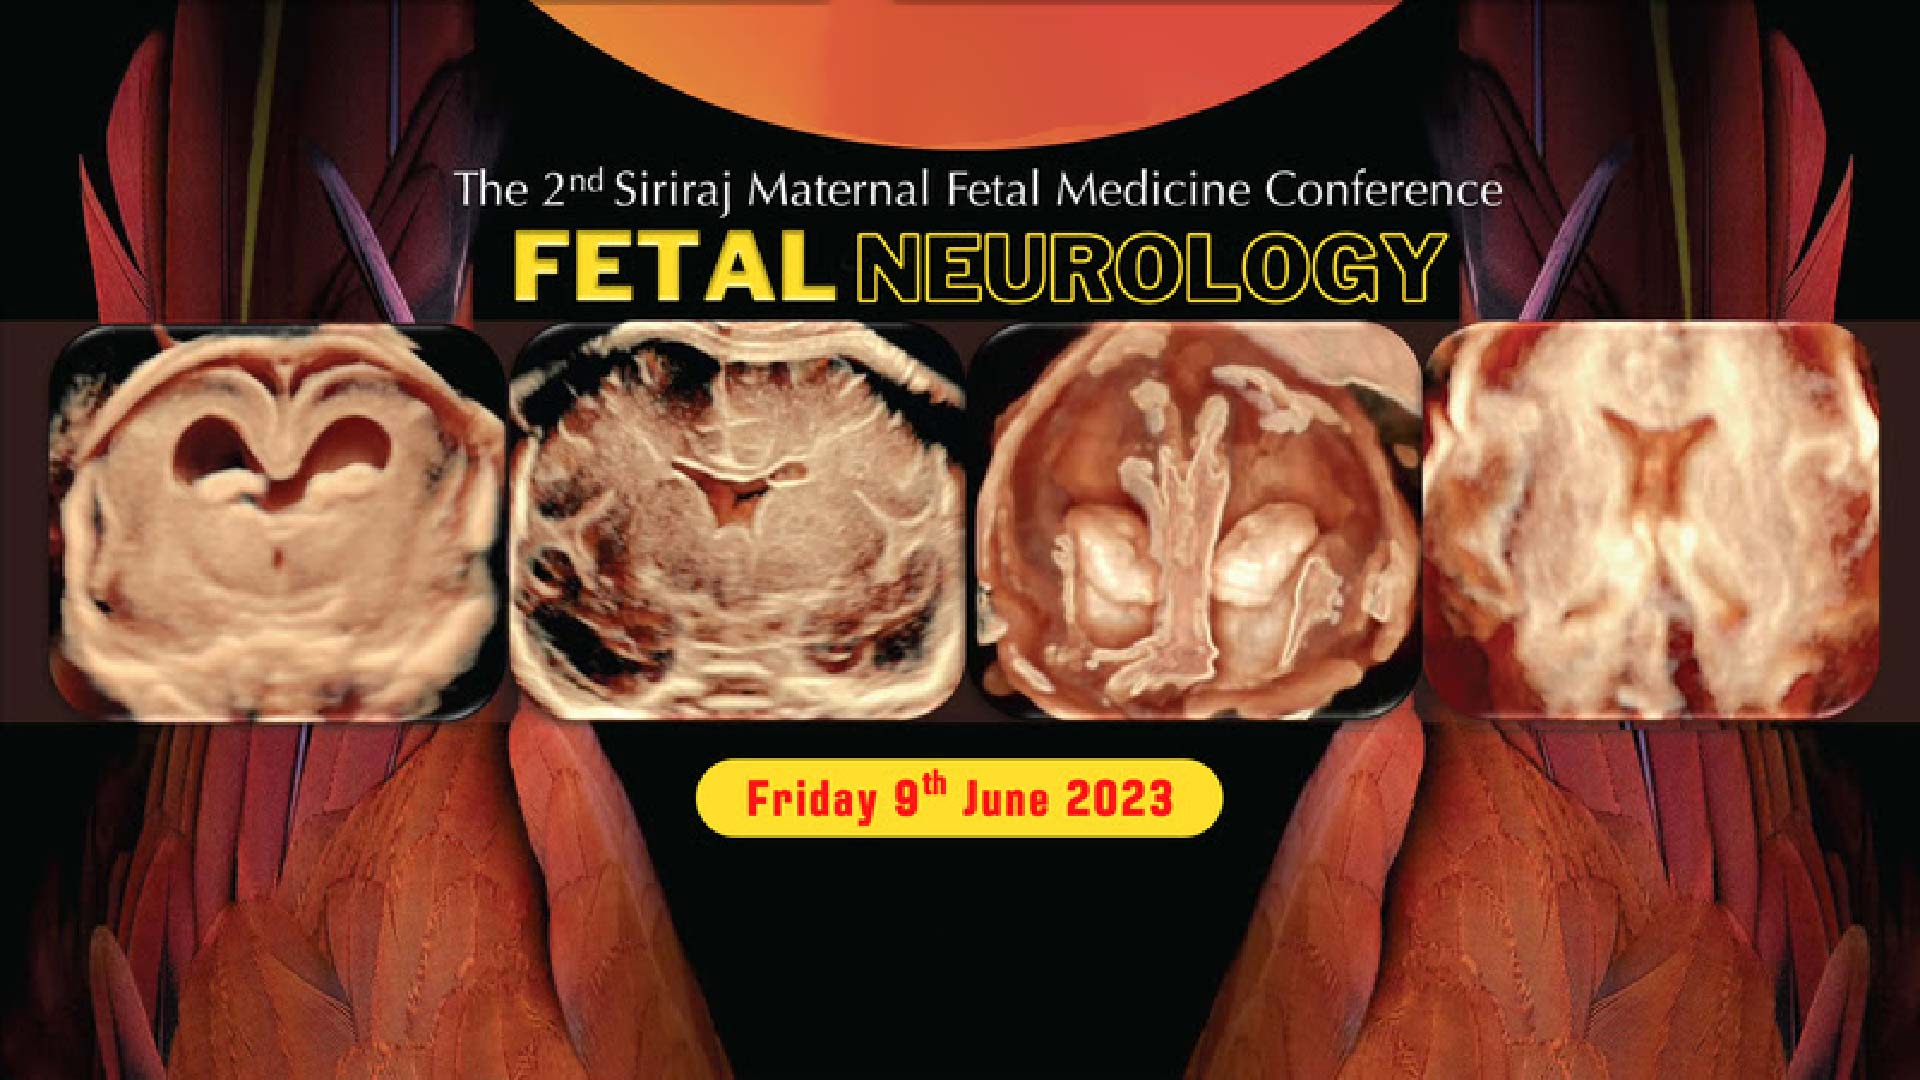 The 2nd Siriraj Maternal Fetal Medicine Conference FETAL NEUROLOGY